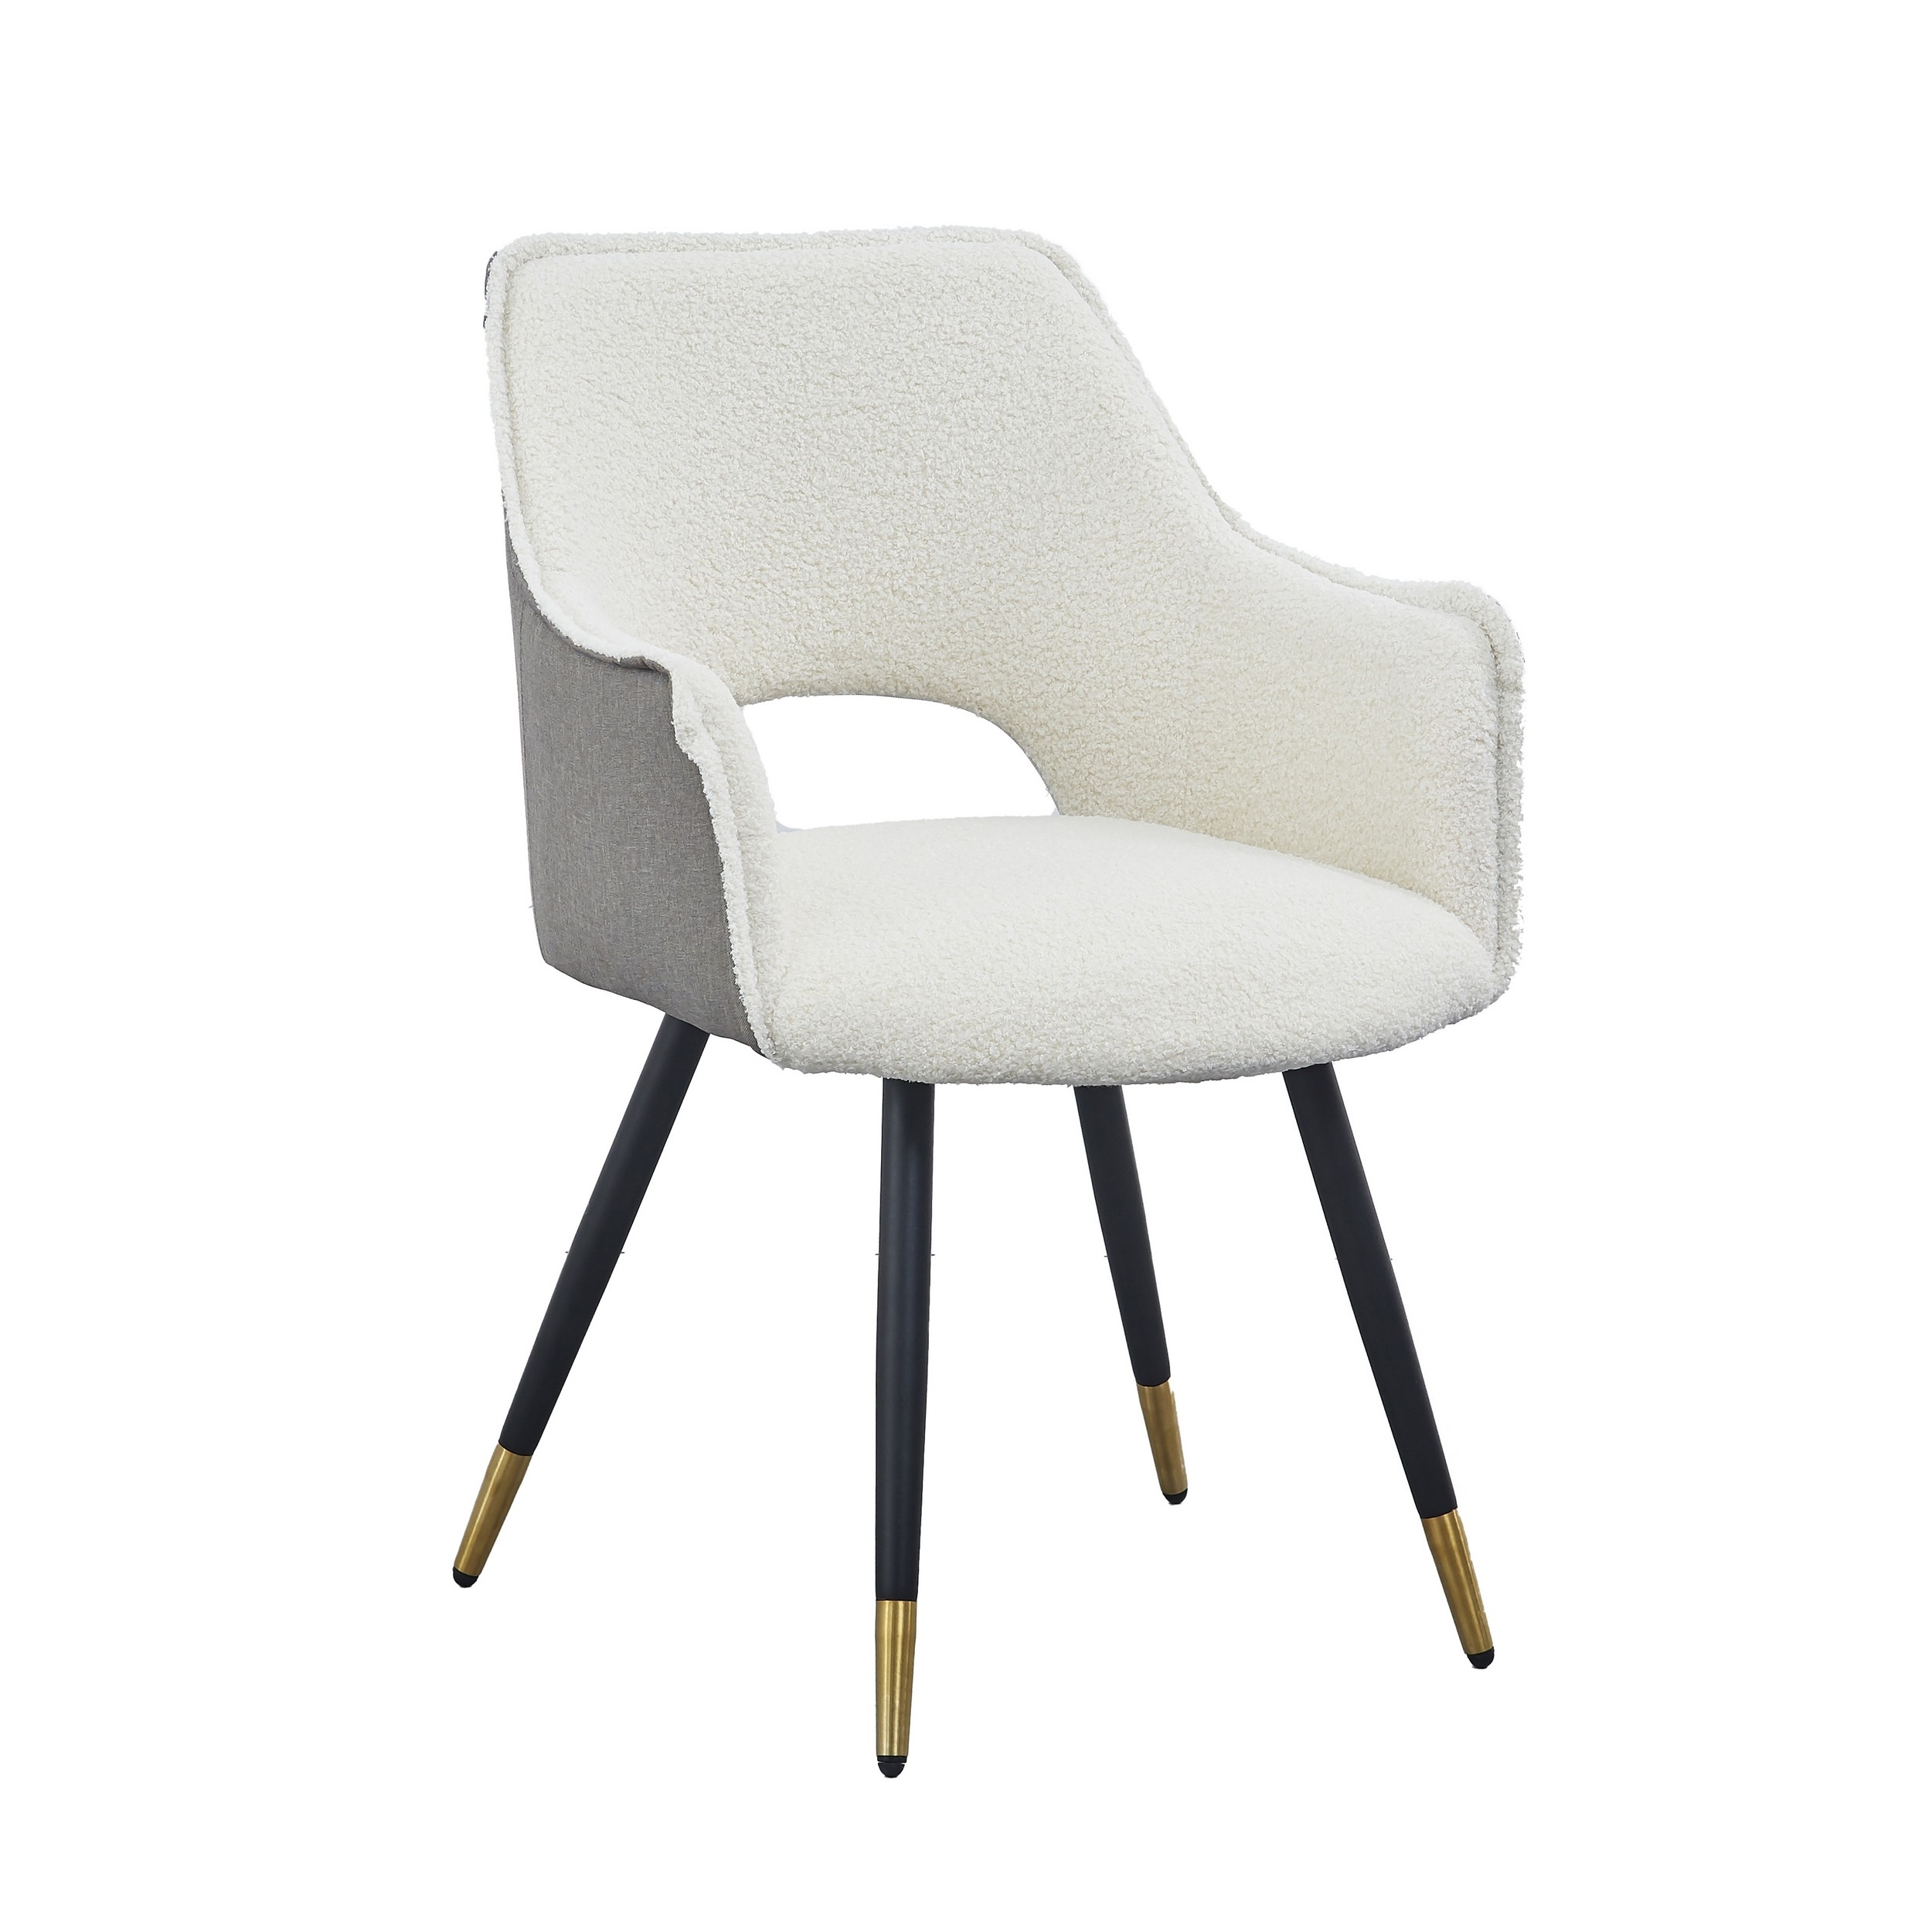 Eden 23 Inch Modern Dining Chair, White Fabric, Black Metal Legs, Set Of 2- Saltoro Sherpi